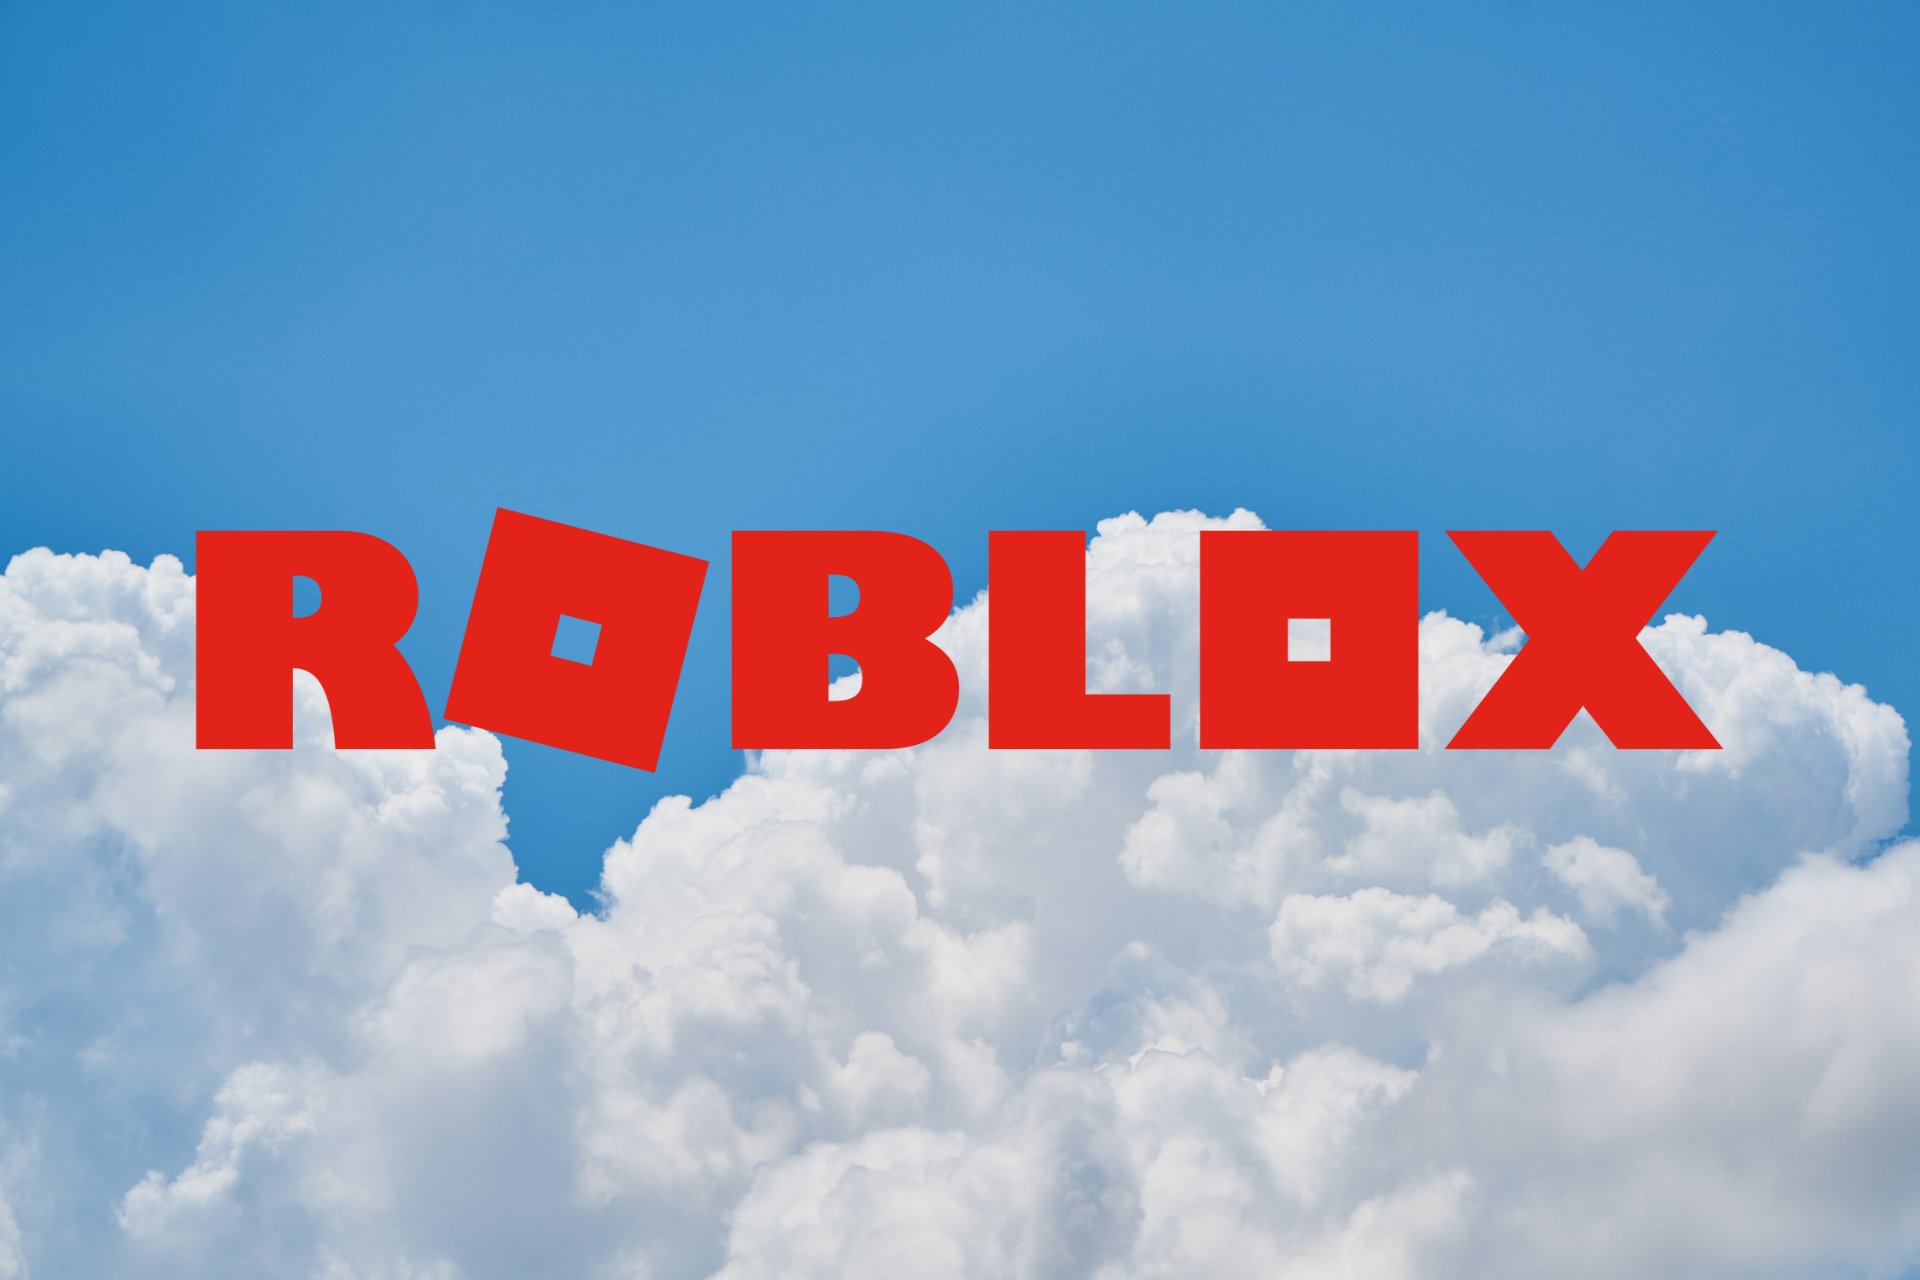 How to fix the Roblox error code E01